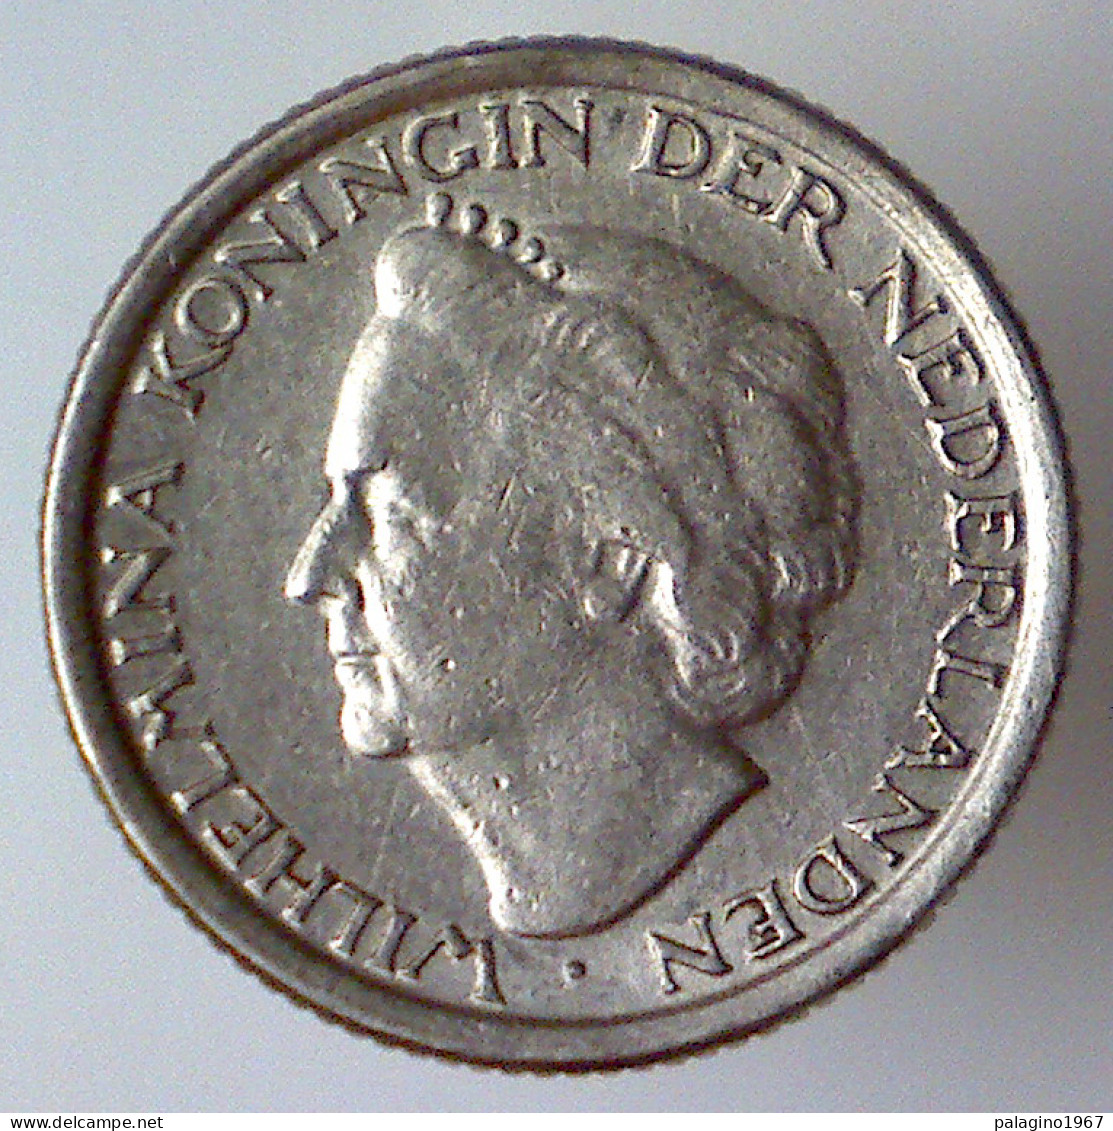 REGNO D'OLANDA 10 Cents 1948 BB++  - 10 Cent